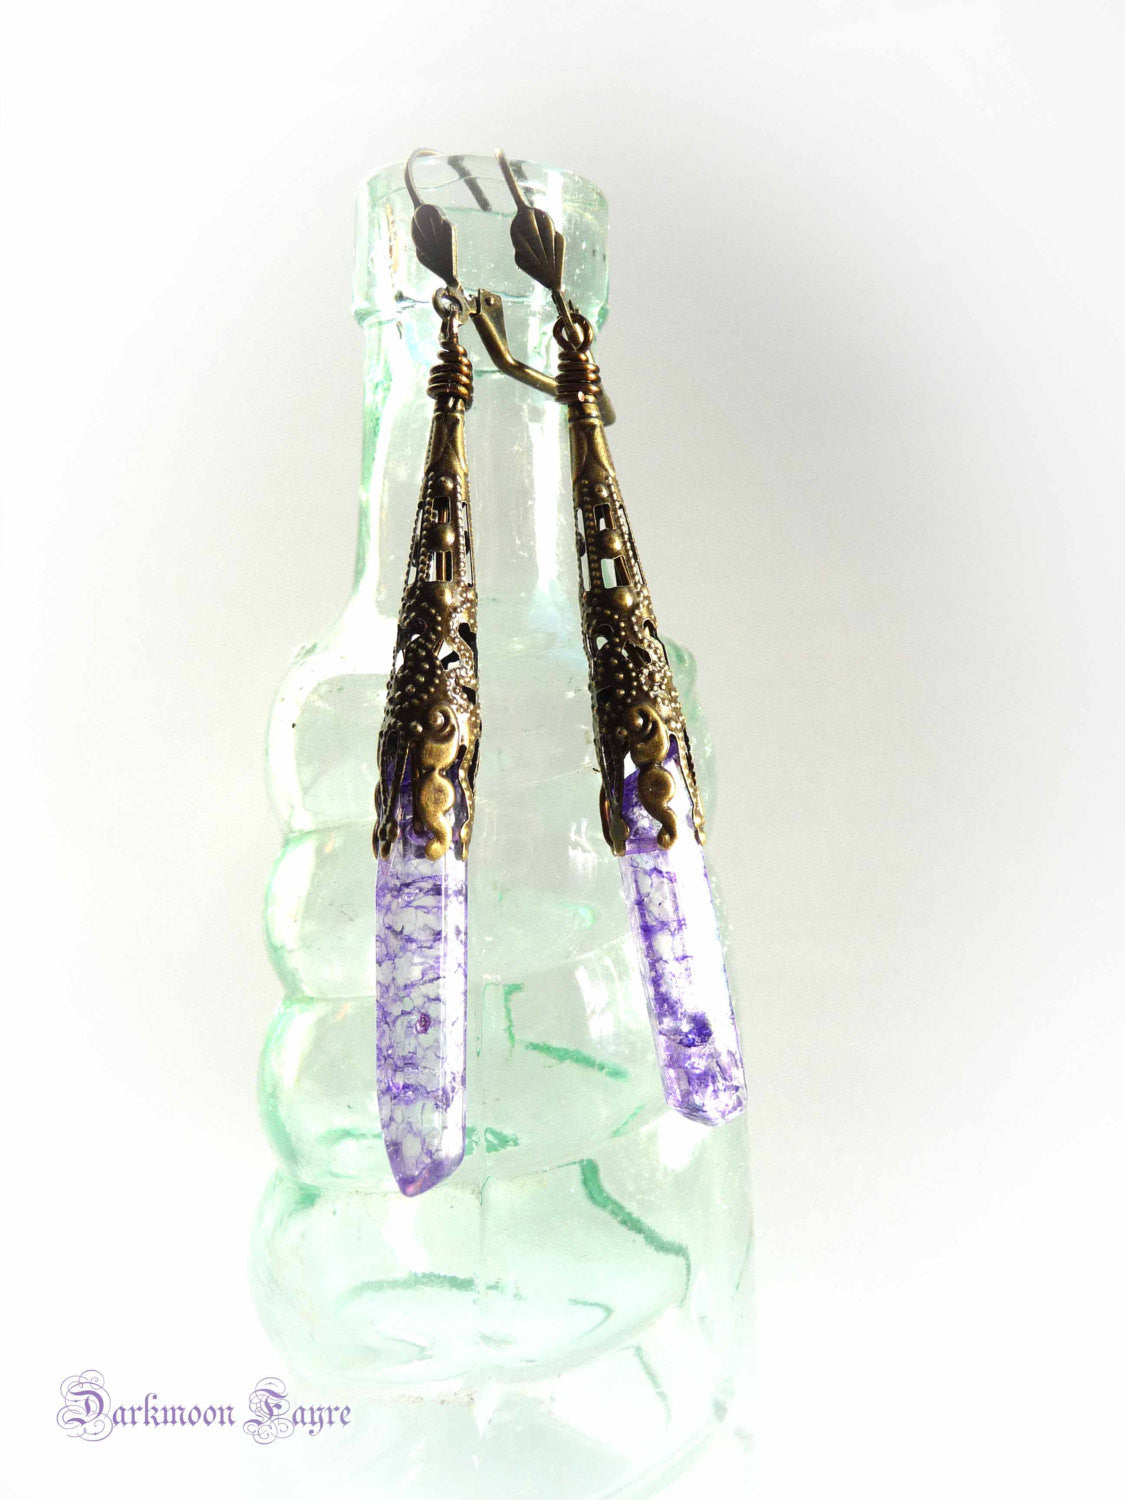 Dark Caster Crystal Wand Earrings. Mystic Purple Quartz Points. Shoulder Dusters. Antiqued Bronze Filigree. - Darkmoon Fayre